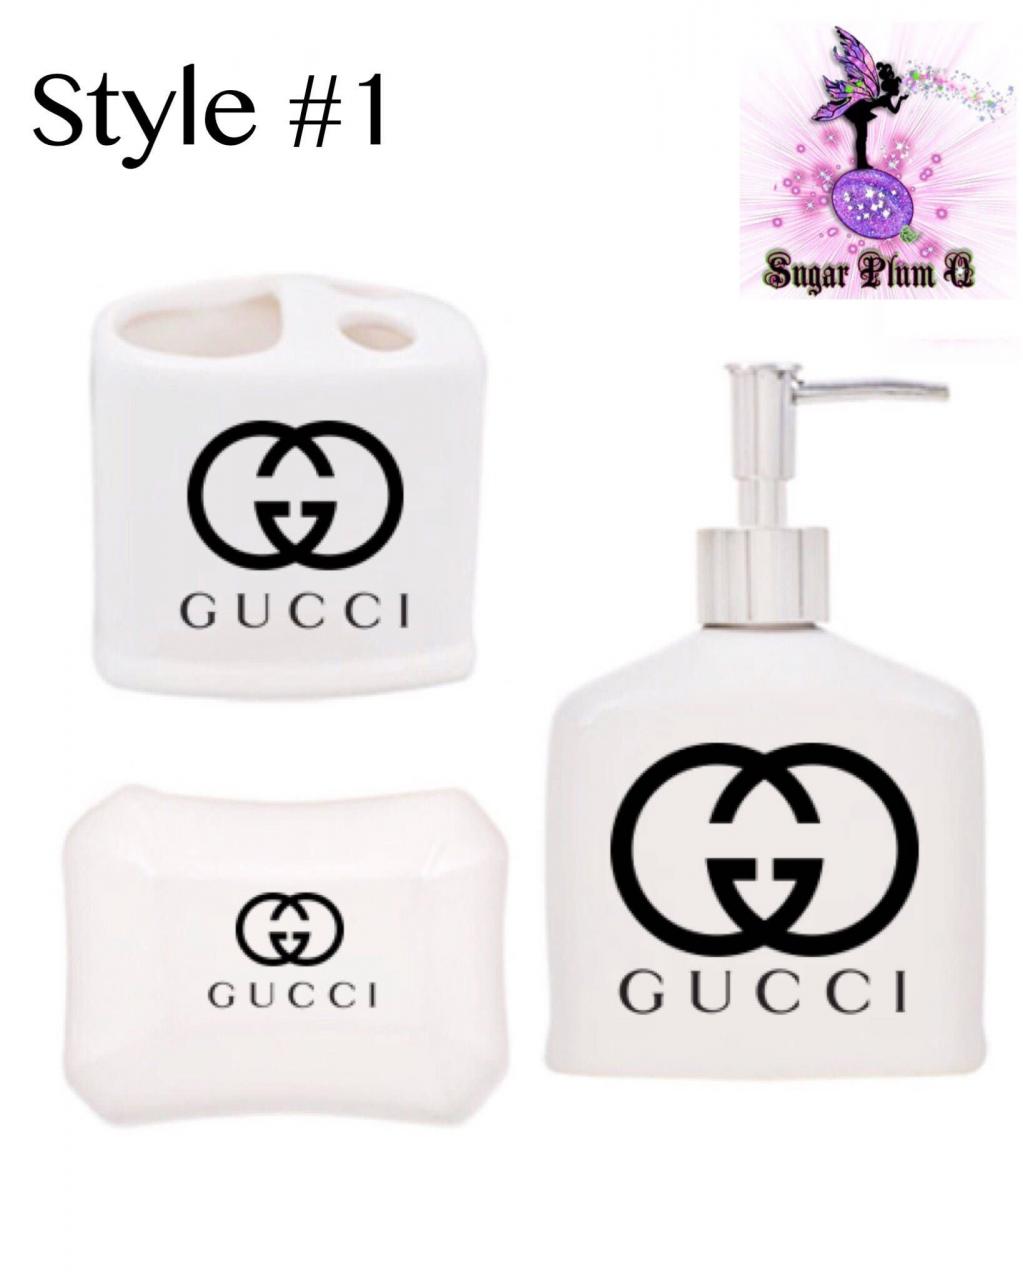 Gucci Bathroom Set Home Inspiration